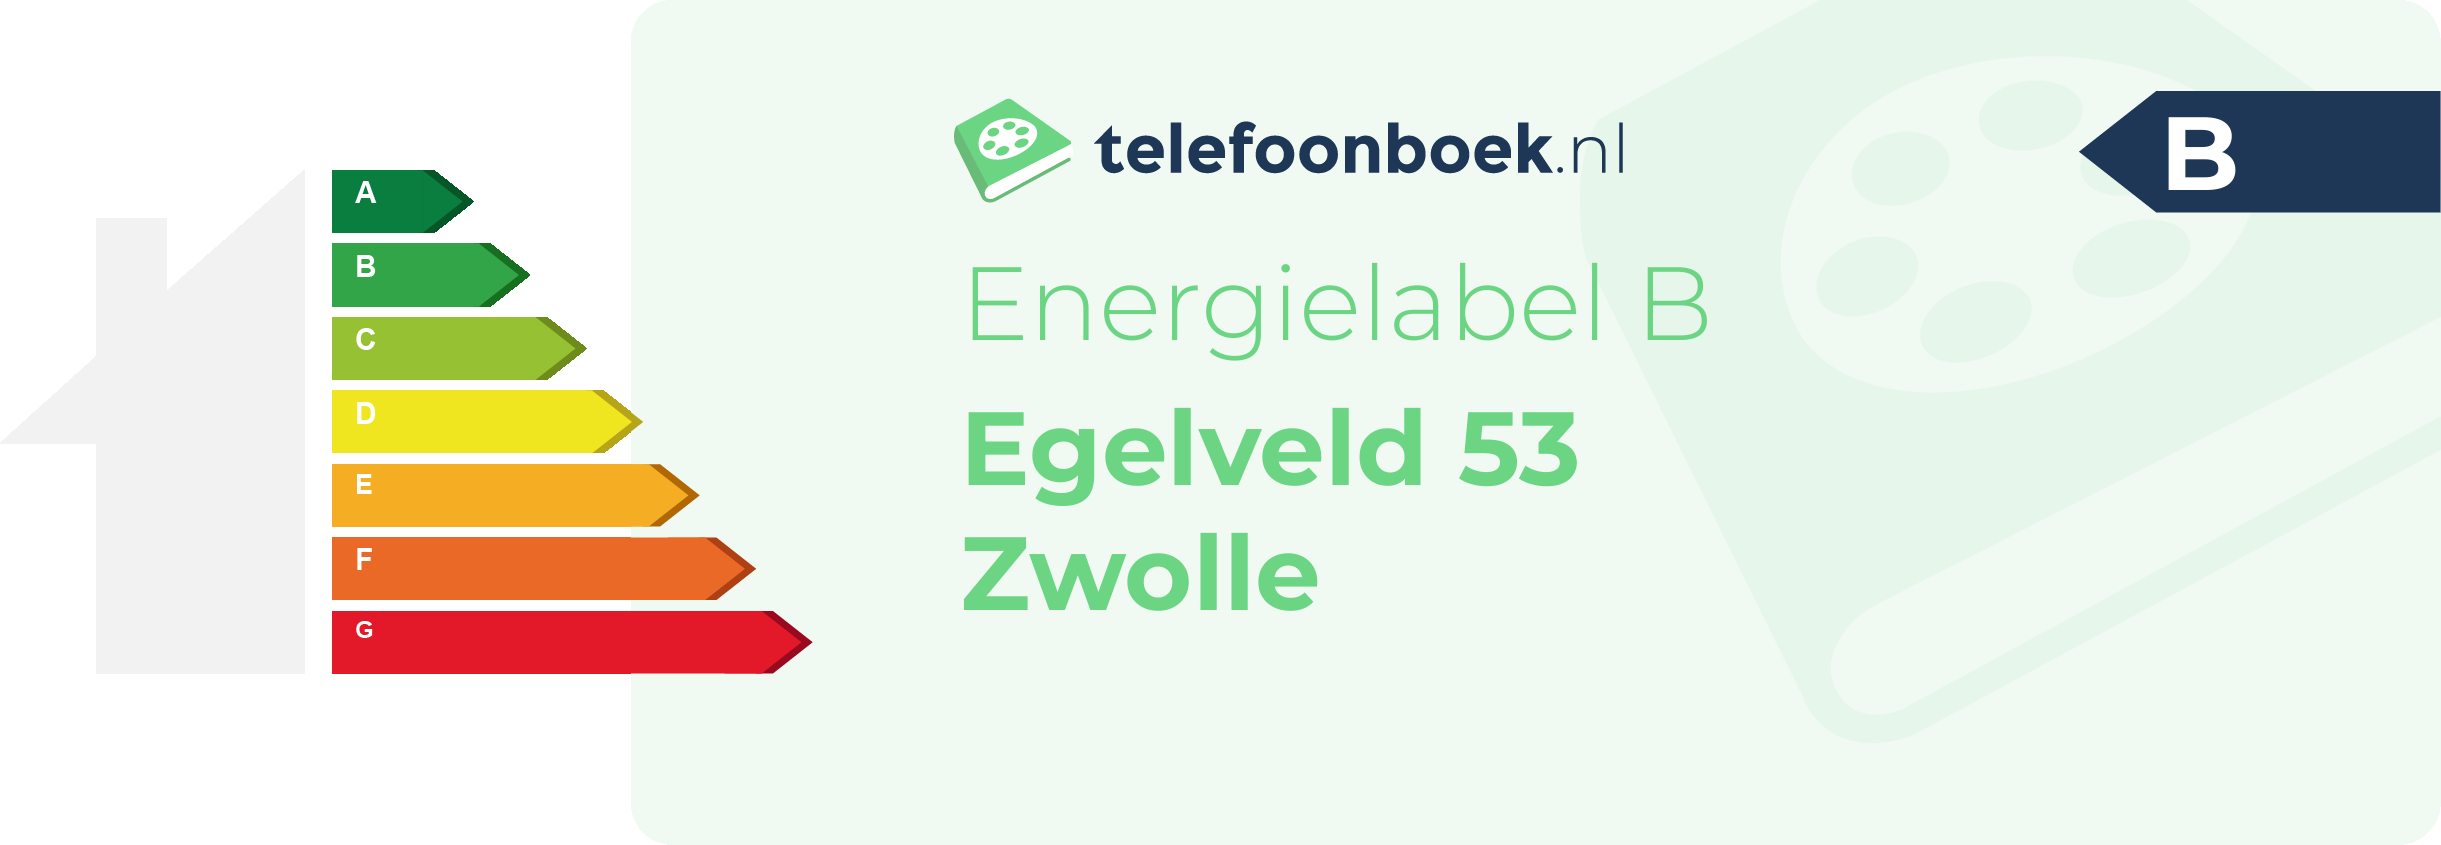 Energielabel Egelveld 53 Zwolle